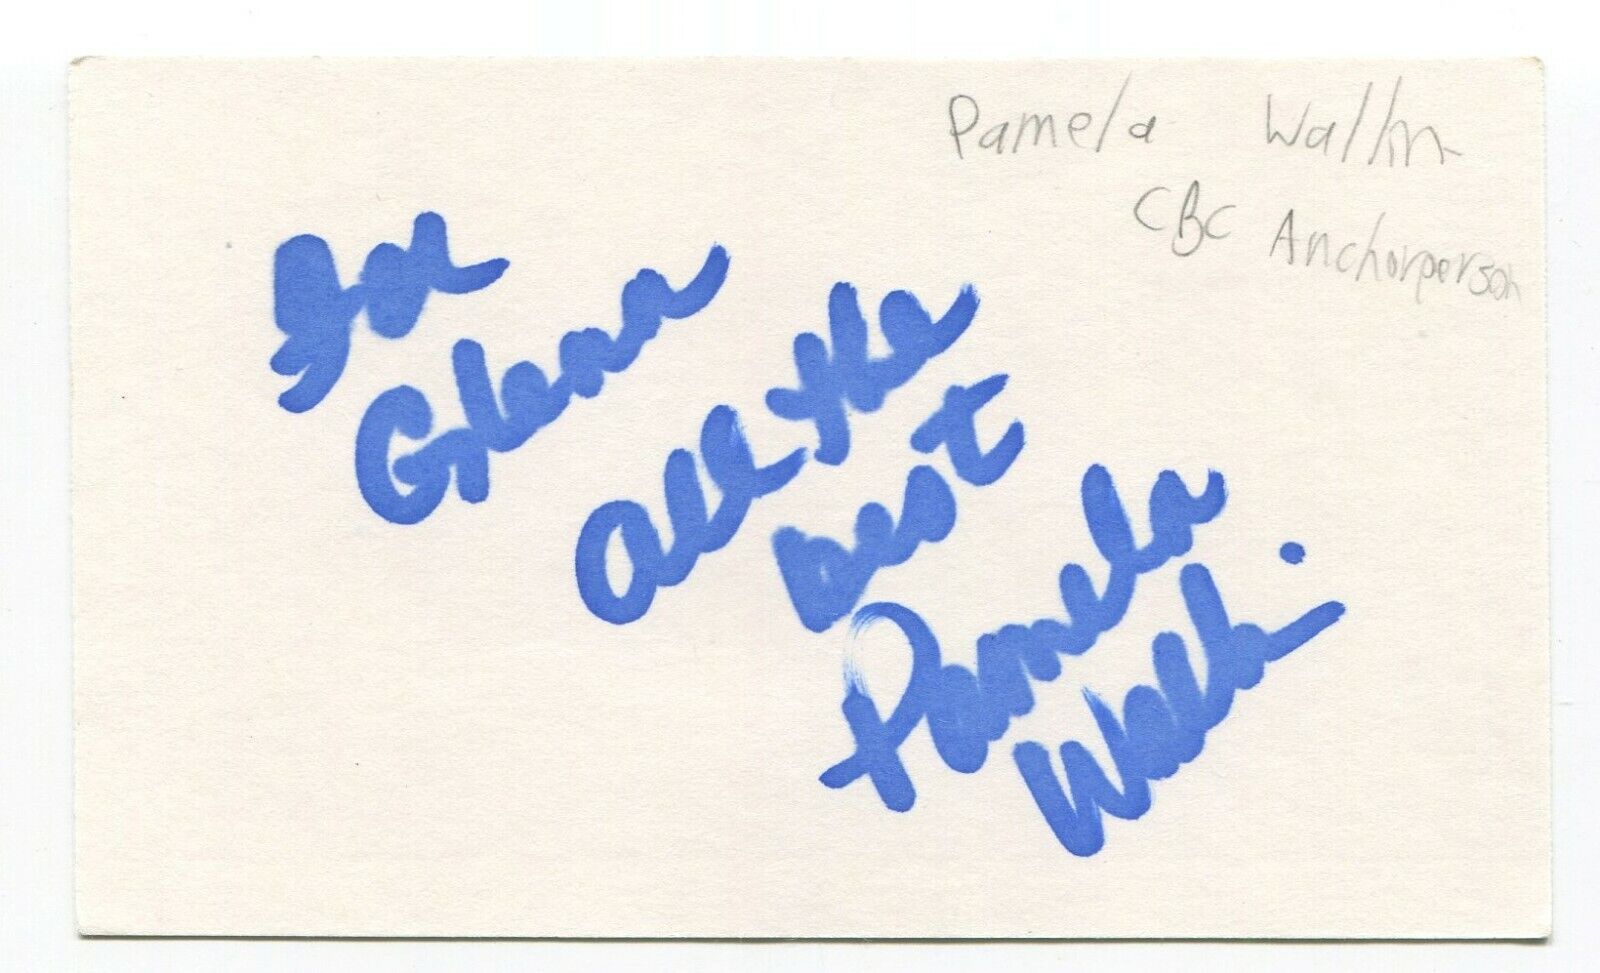 Pamela Wallin Signed 3x5 Index Card Autographed Signature Journalist Politician